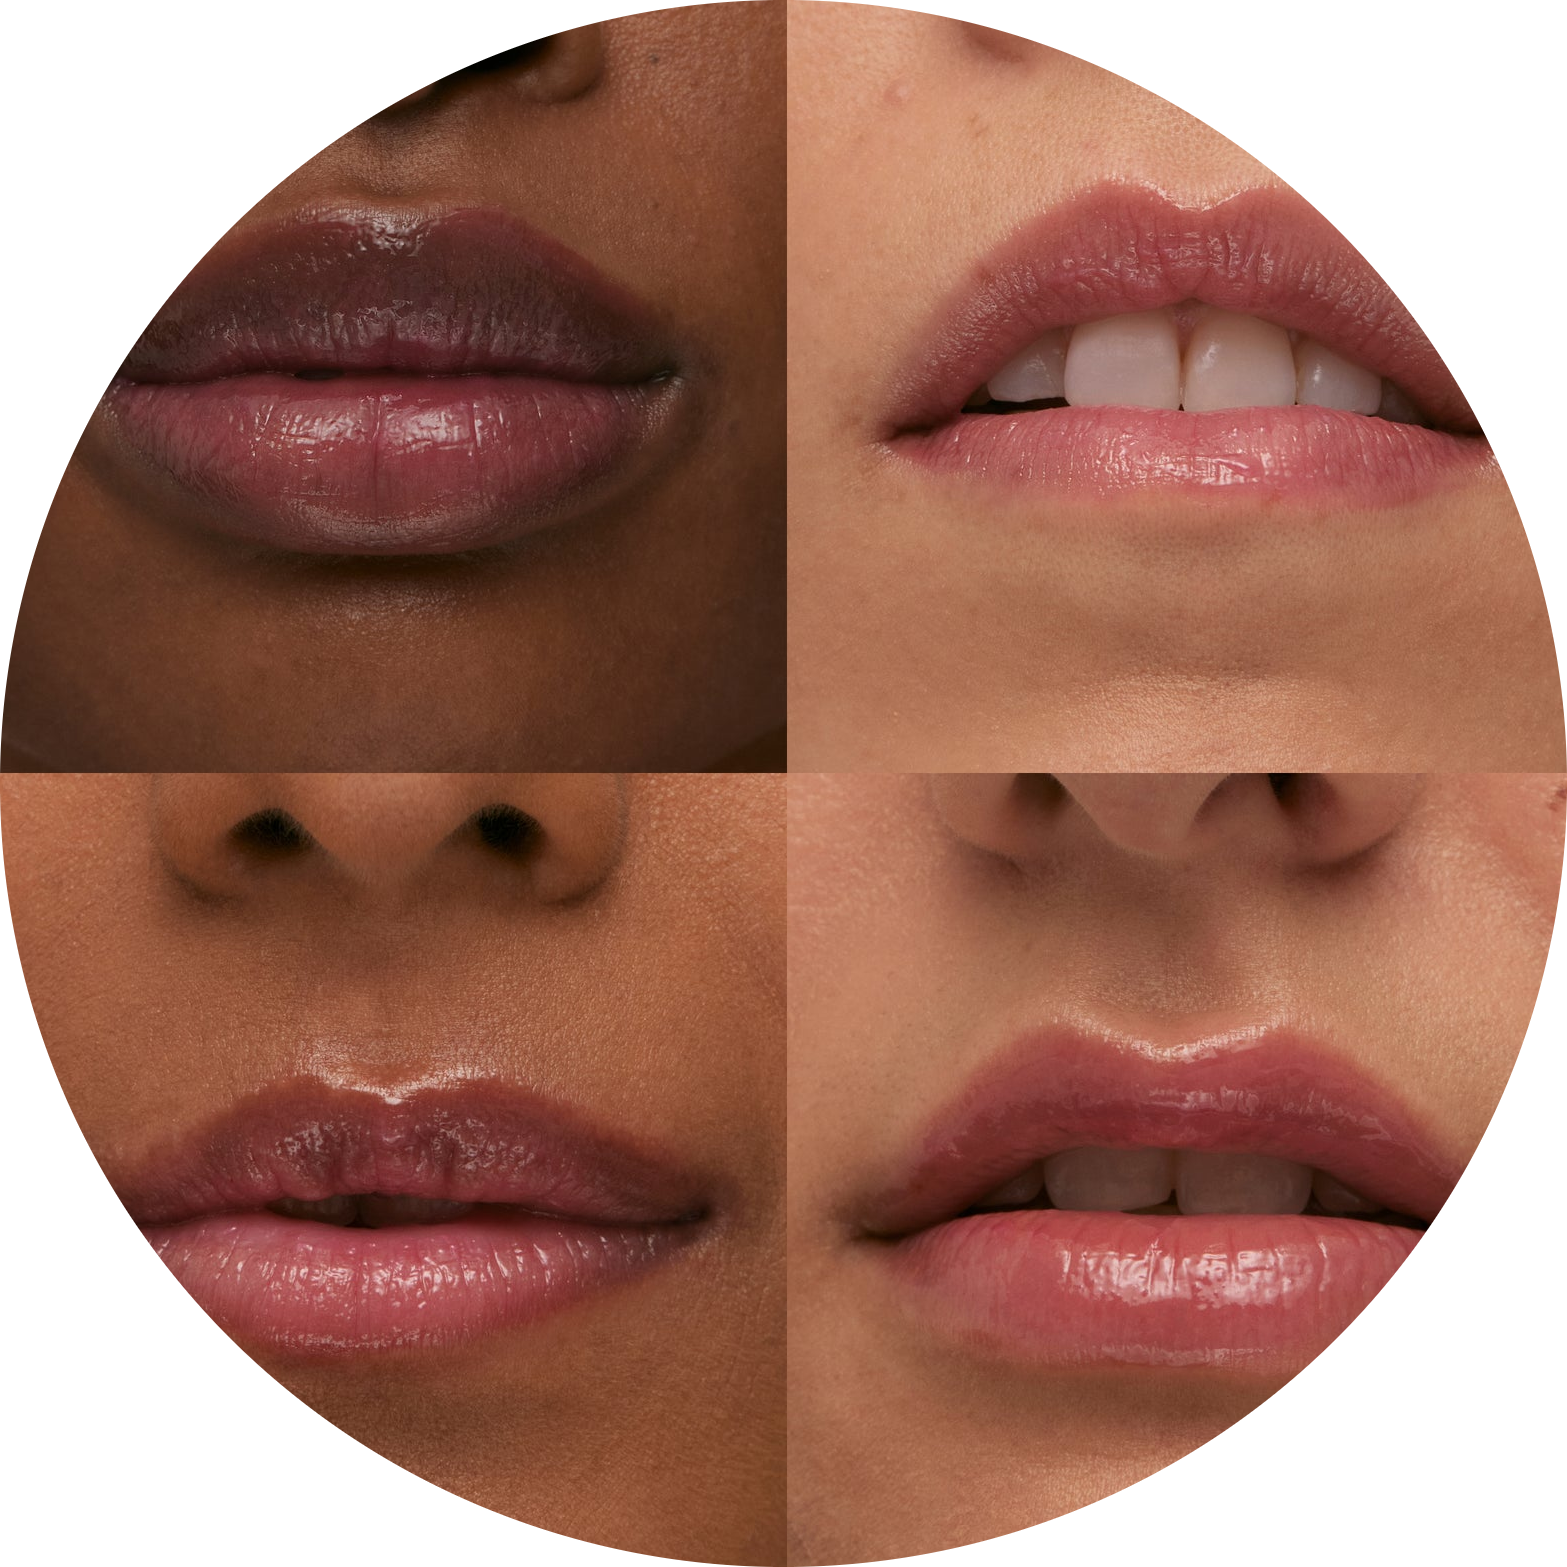 Tripeptide Plumping Lip Balm – Pink Tint